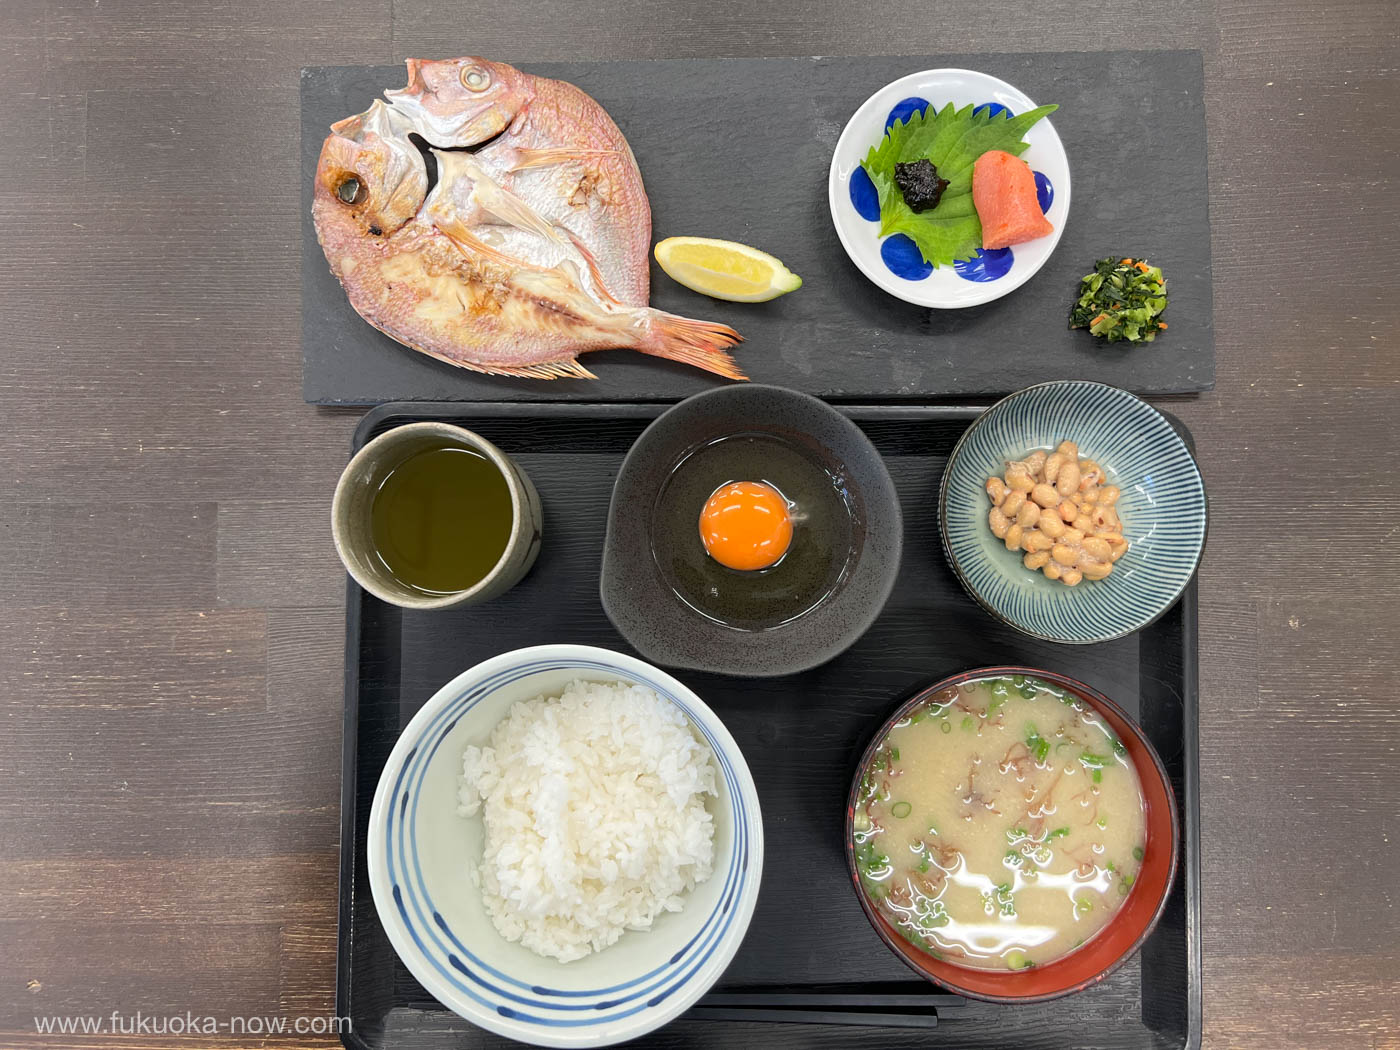 Itoshima morning set, 糸島産の物だけで作ったうお旅スペシャル朝食